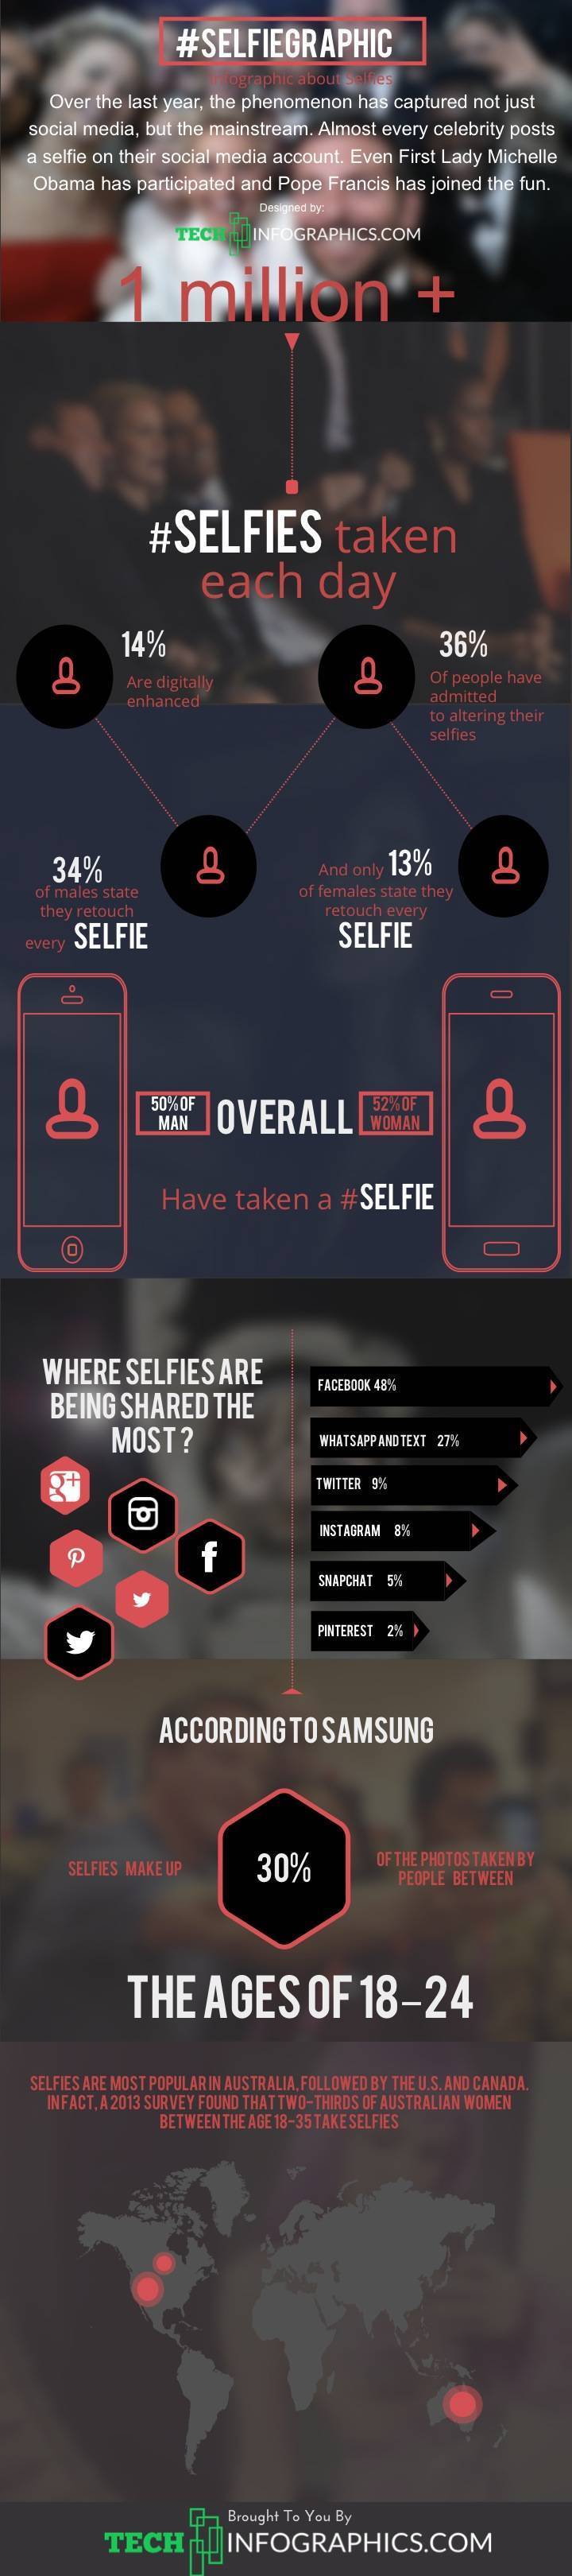 salfie-infographic-selfiegraphic1[1]